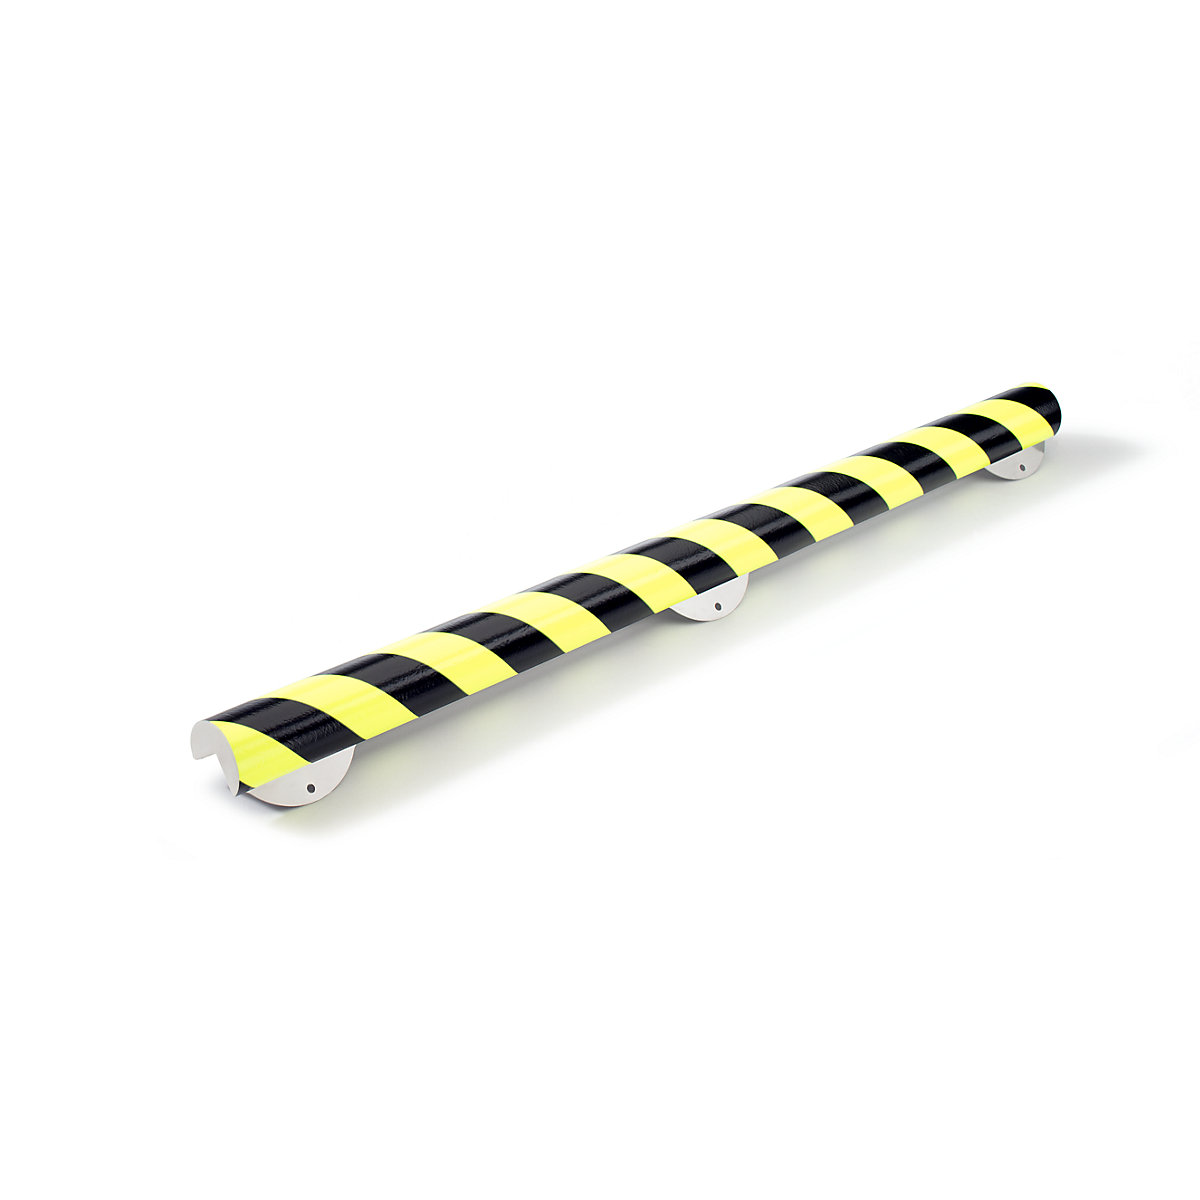 Knuffi® hoekbescherming met montagerail – SHG, type A+, stuk van 1 m, zwart/fluorescerend-11